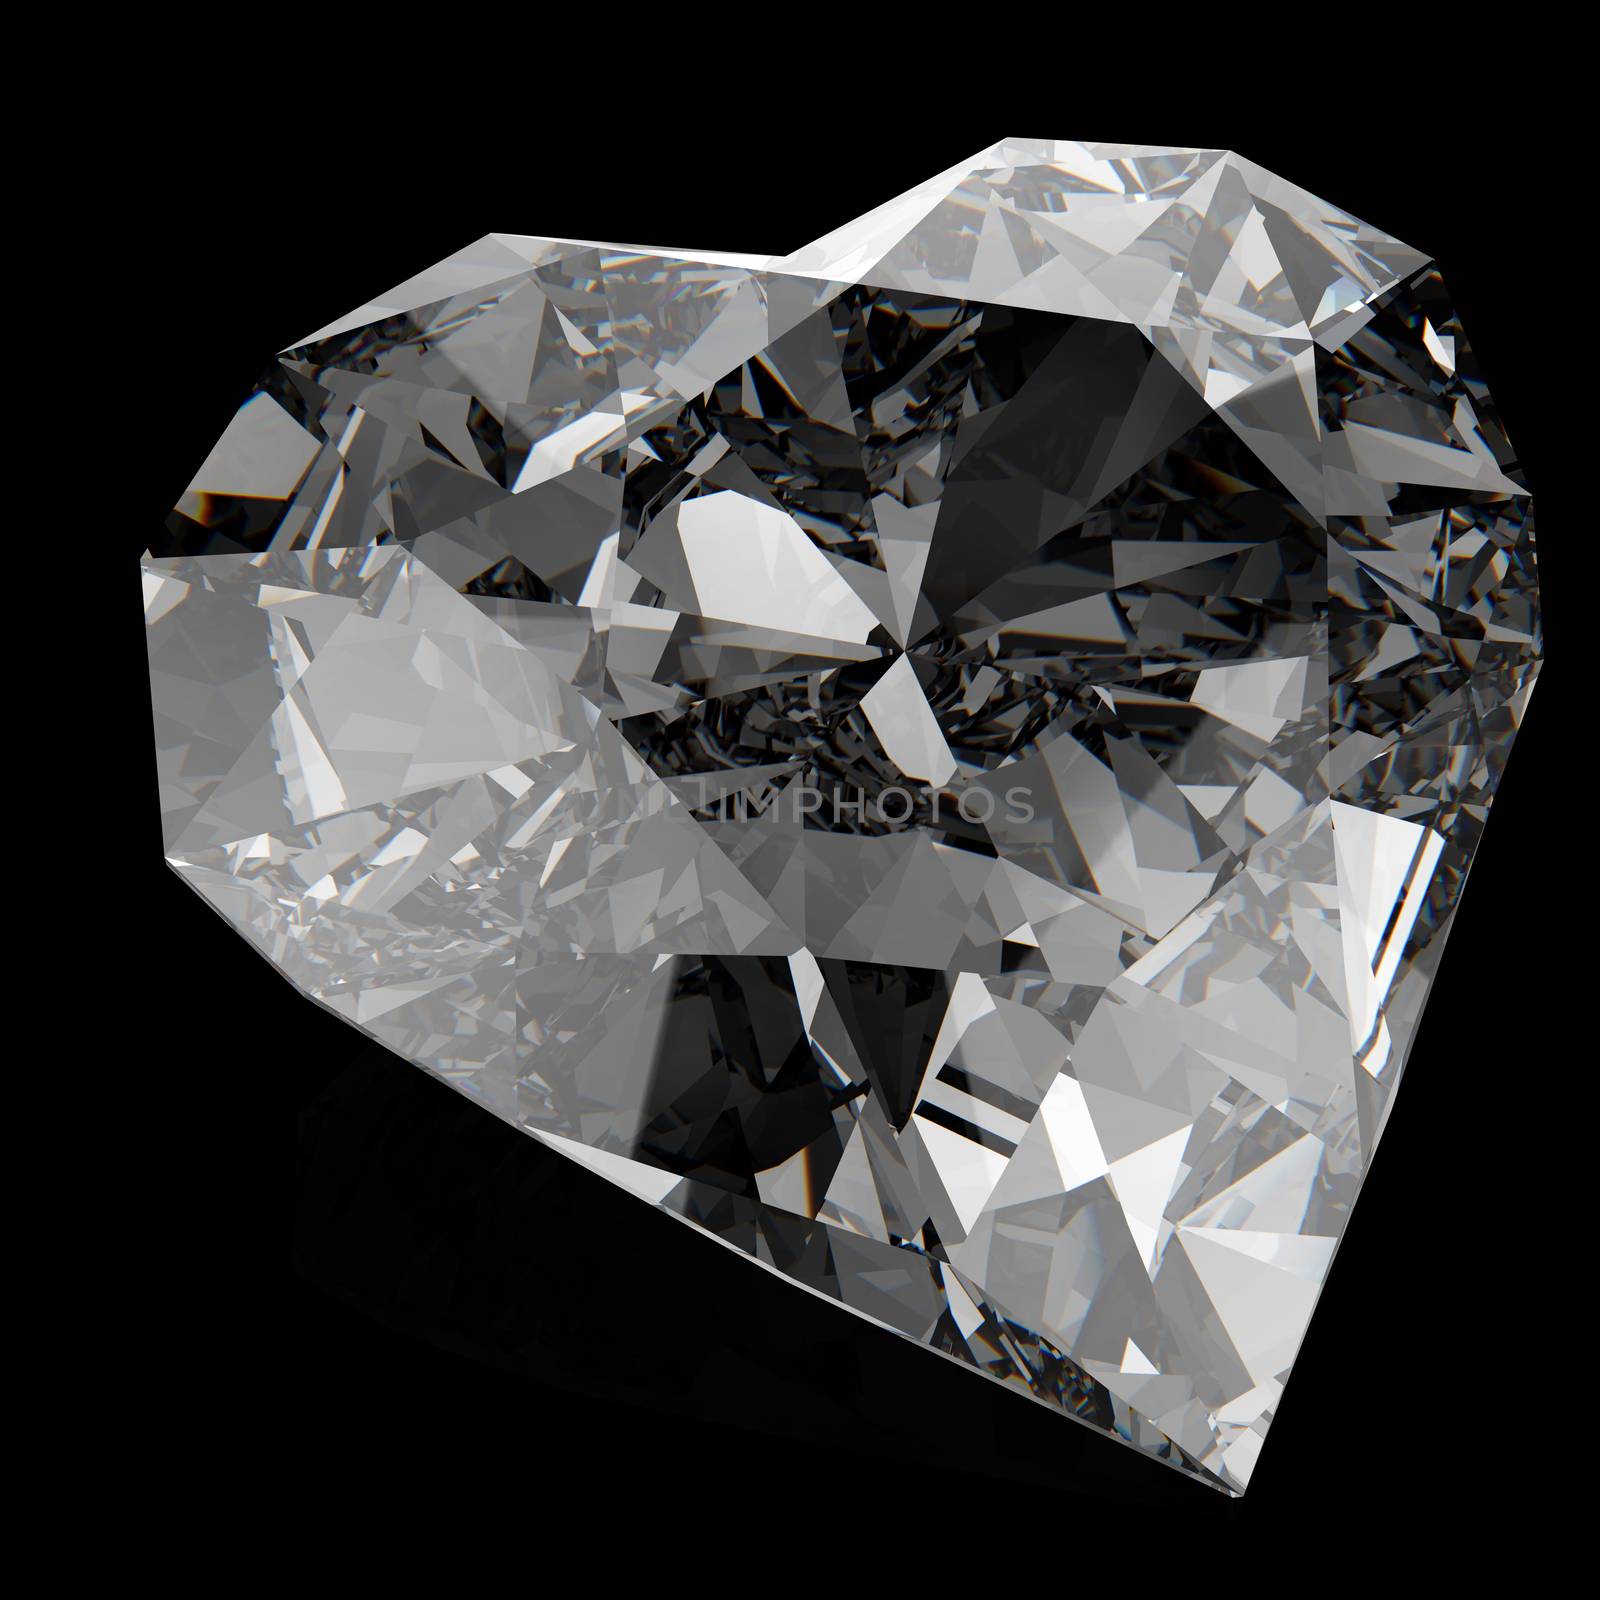 diamond heart shape on black surface